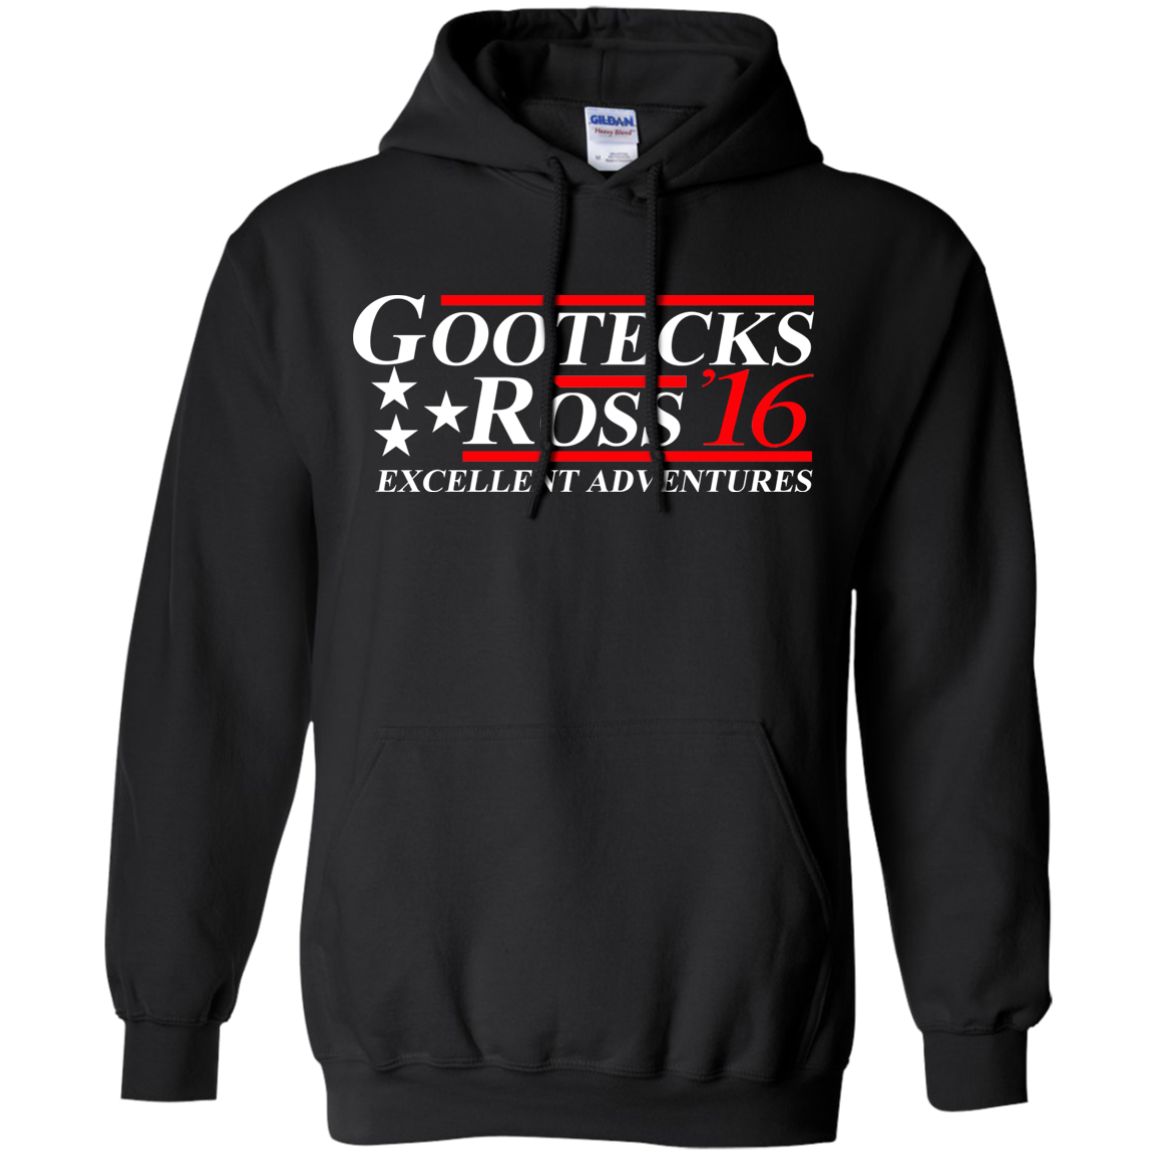 Excellent Adventures Gootecks - Mike Ross Shirt/Hoodie - ifrogtees